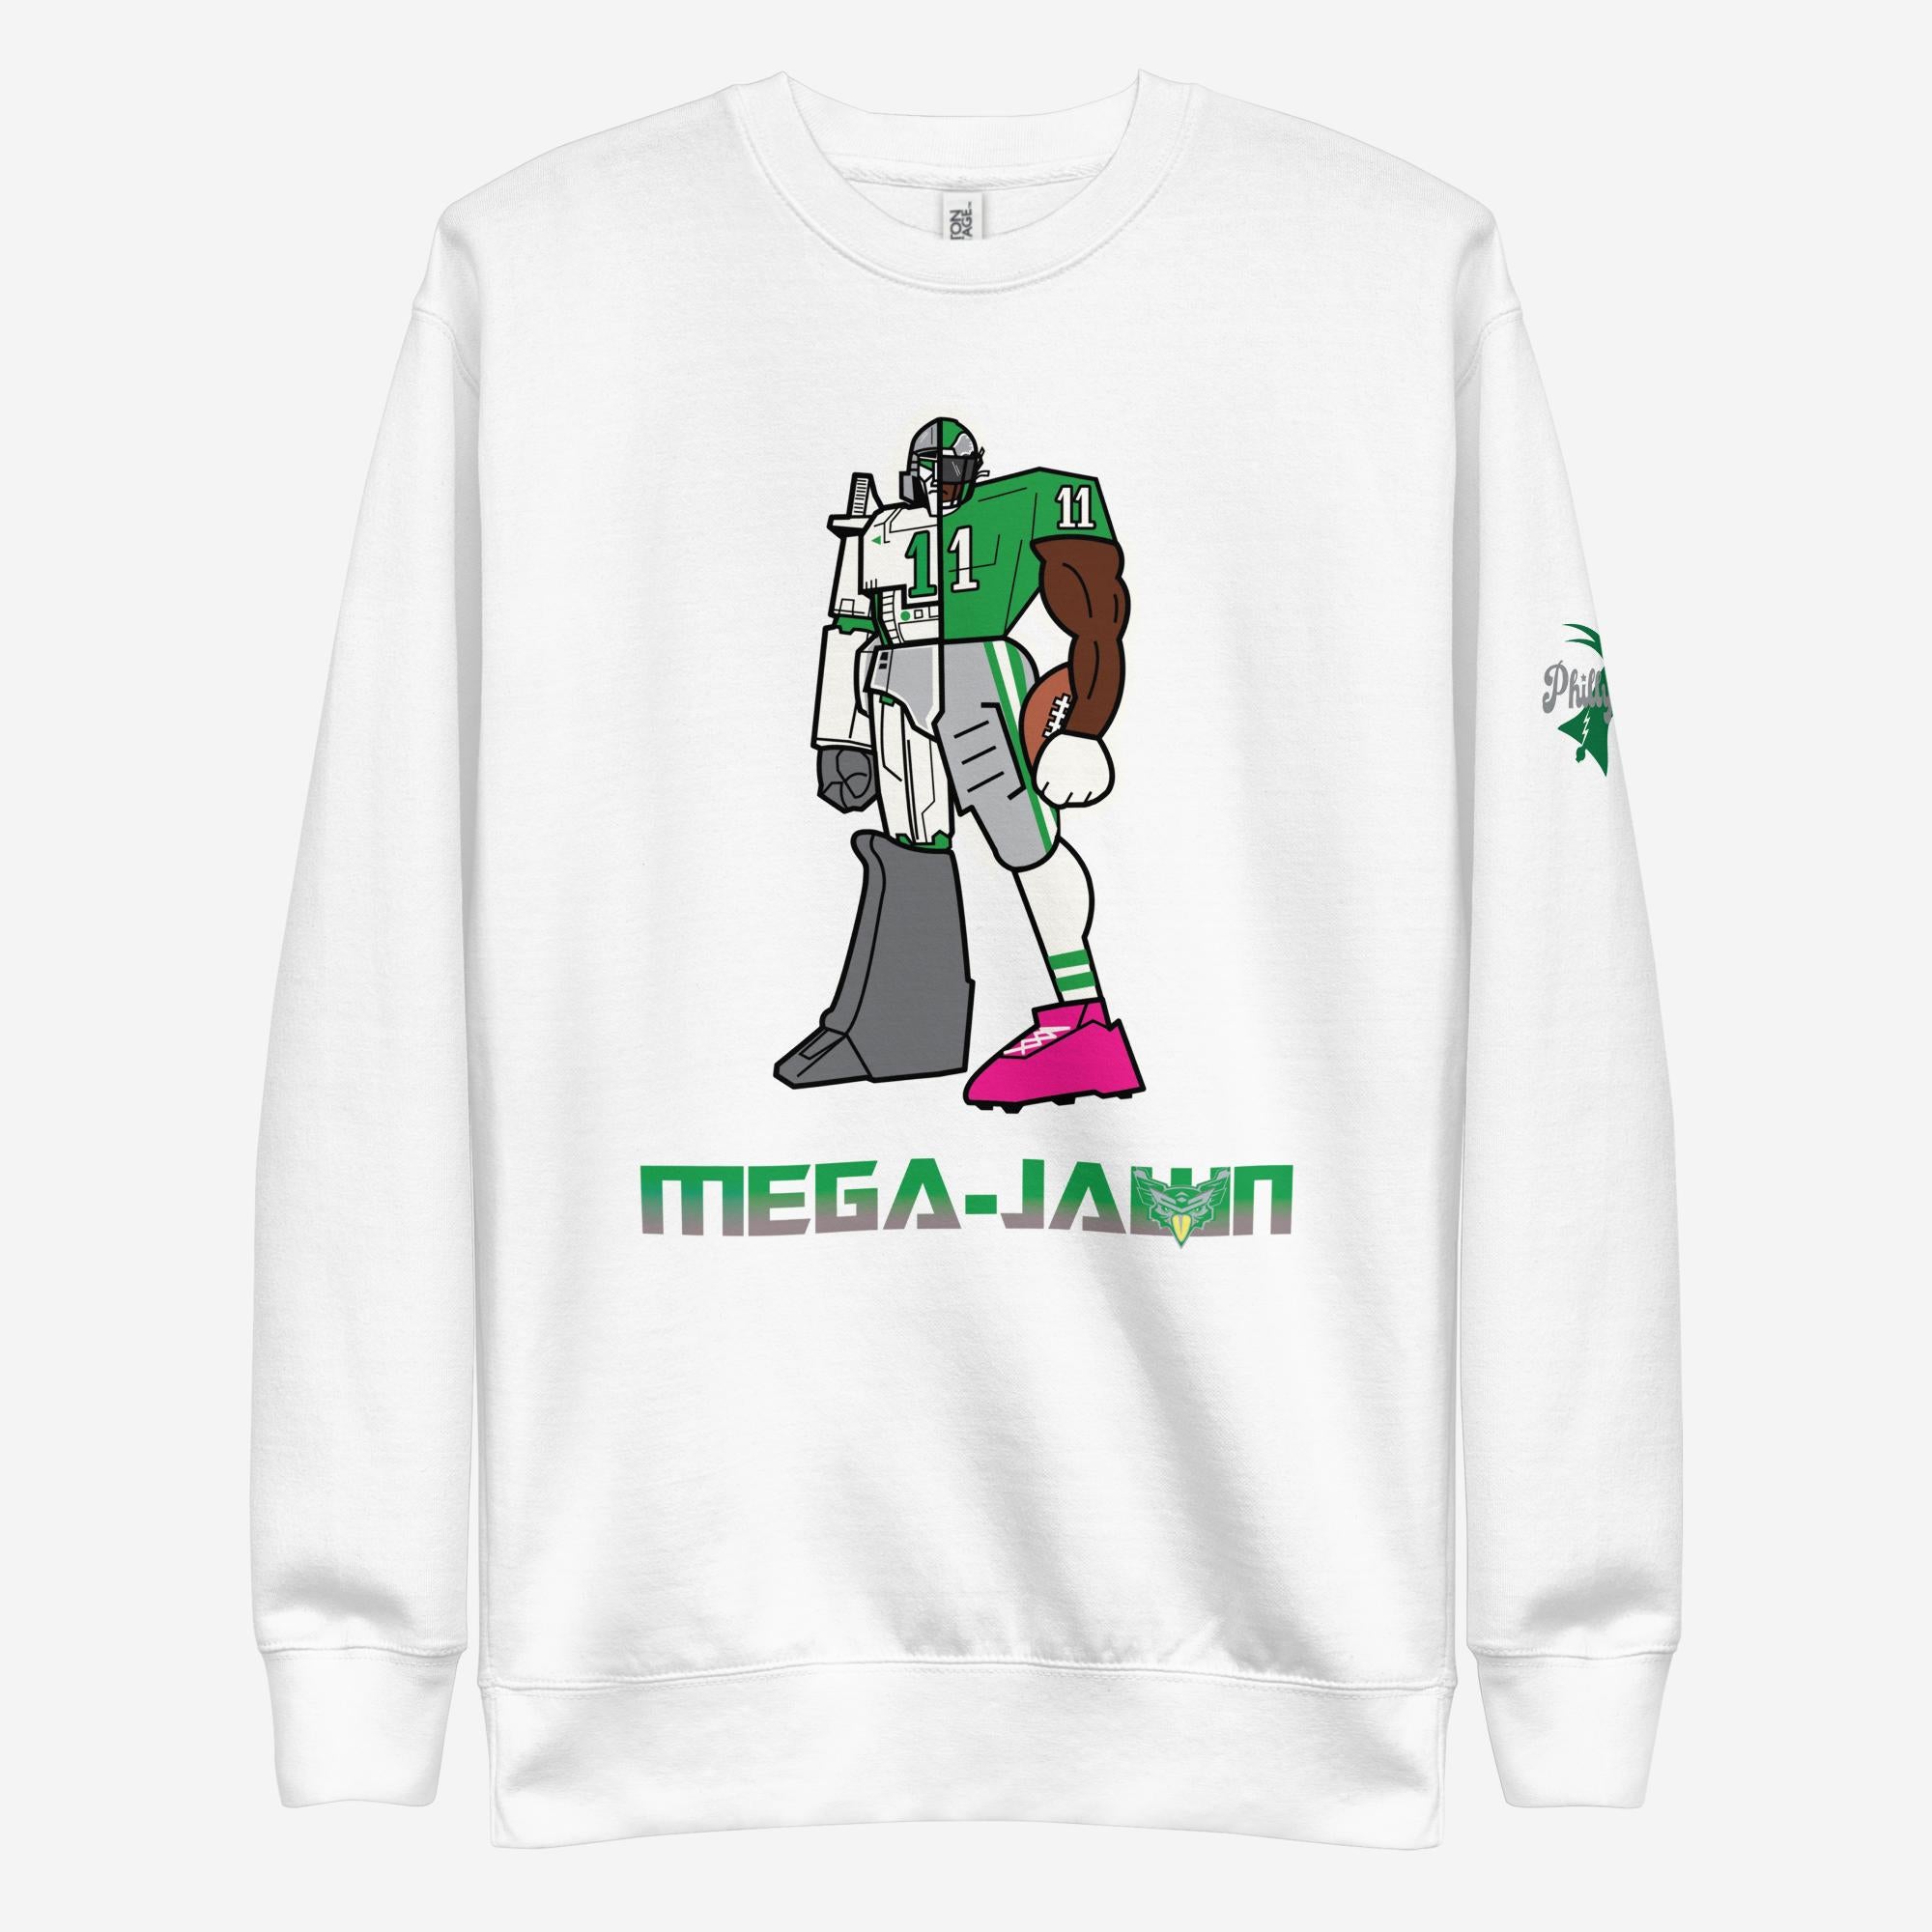 "MEGA-JAWN" Sweatshirt